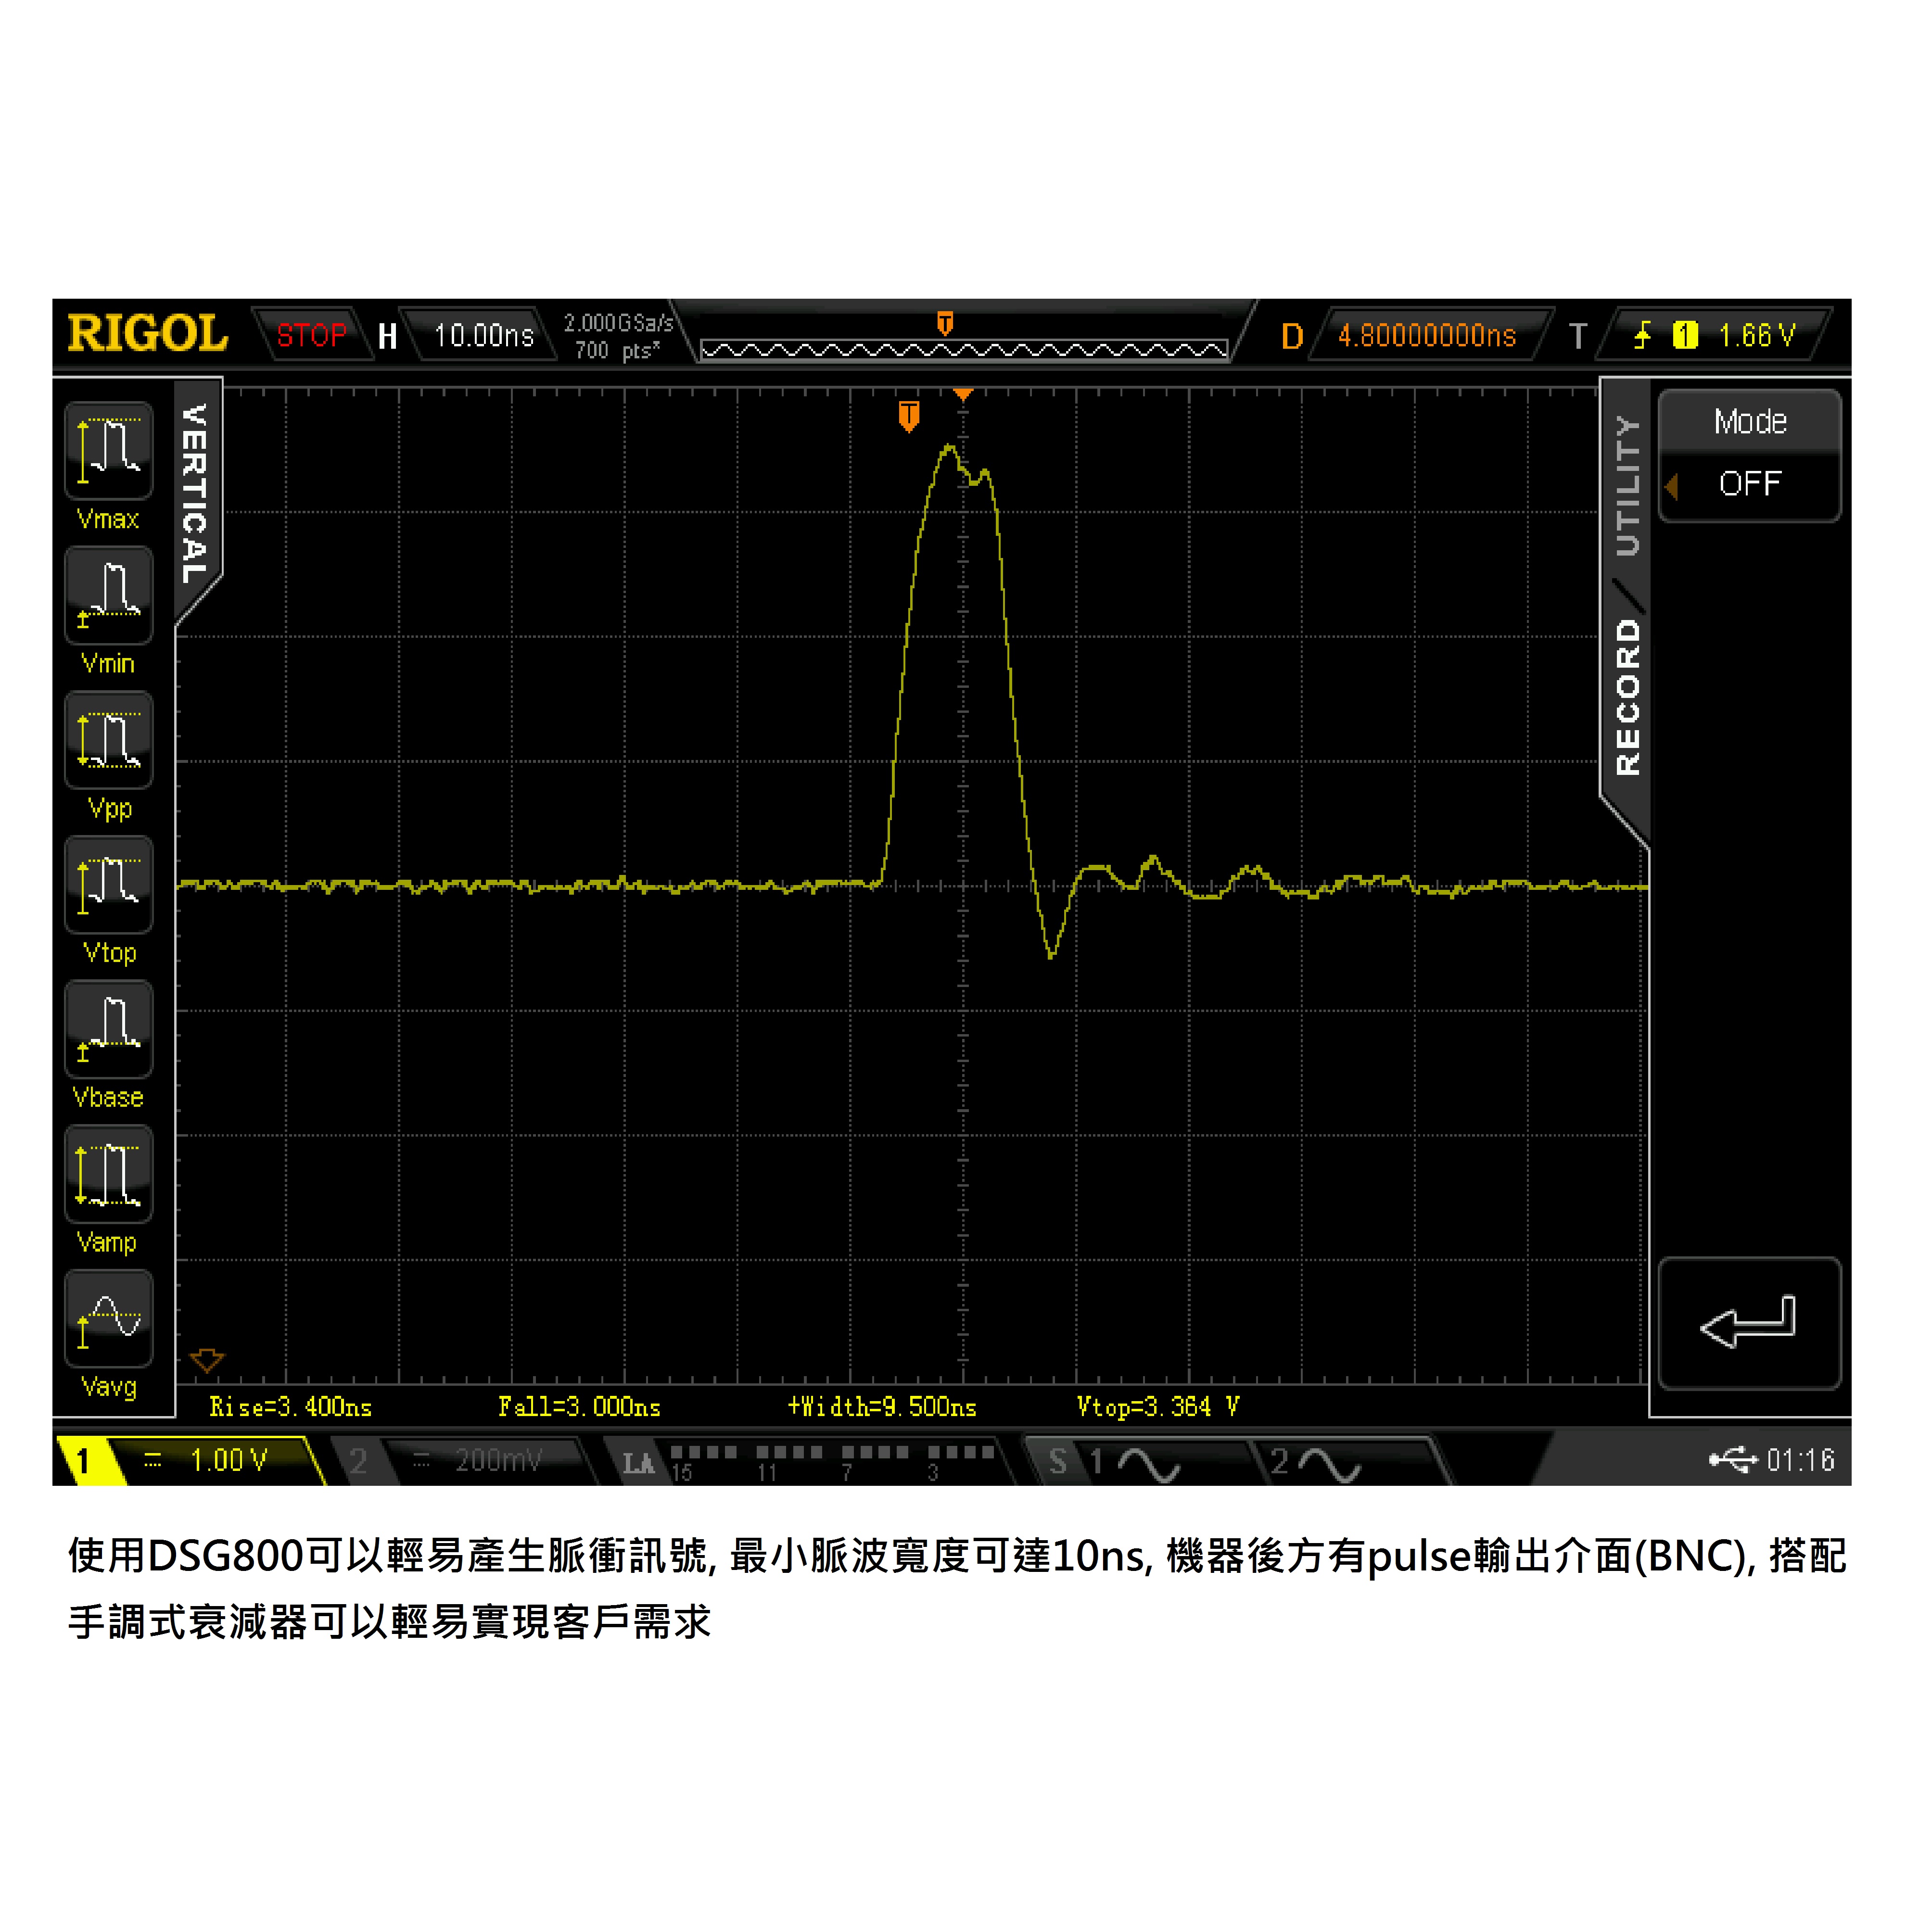 DSG800系列內建脈衝訊號產生器功能,最小可產生10ns脈衝